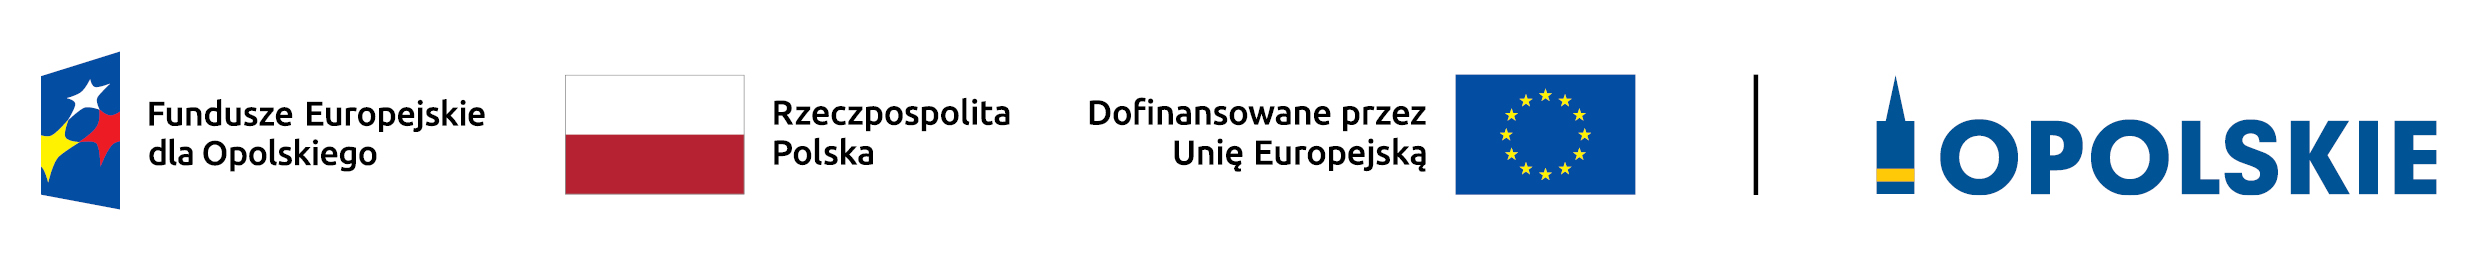 logo FEO flaga RP logo UE Logo woj.opolskiego